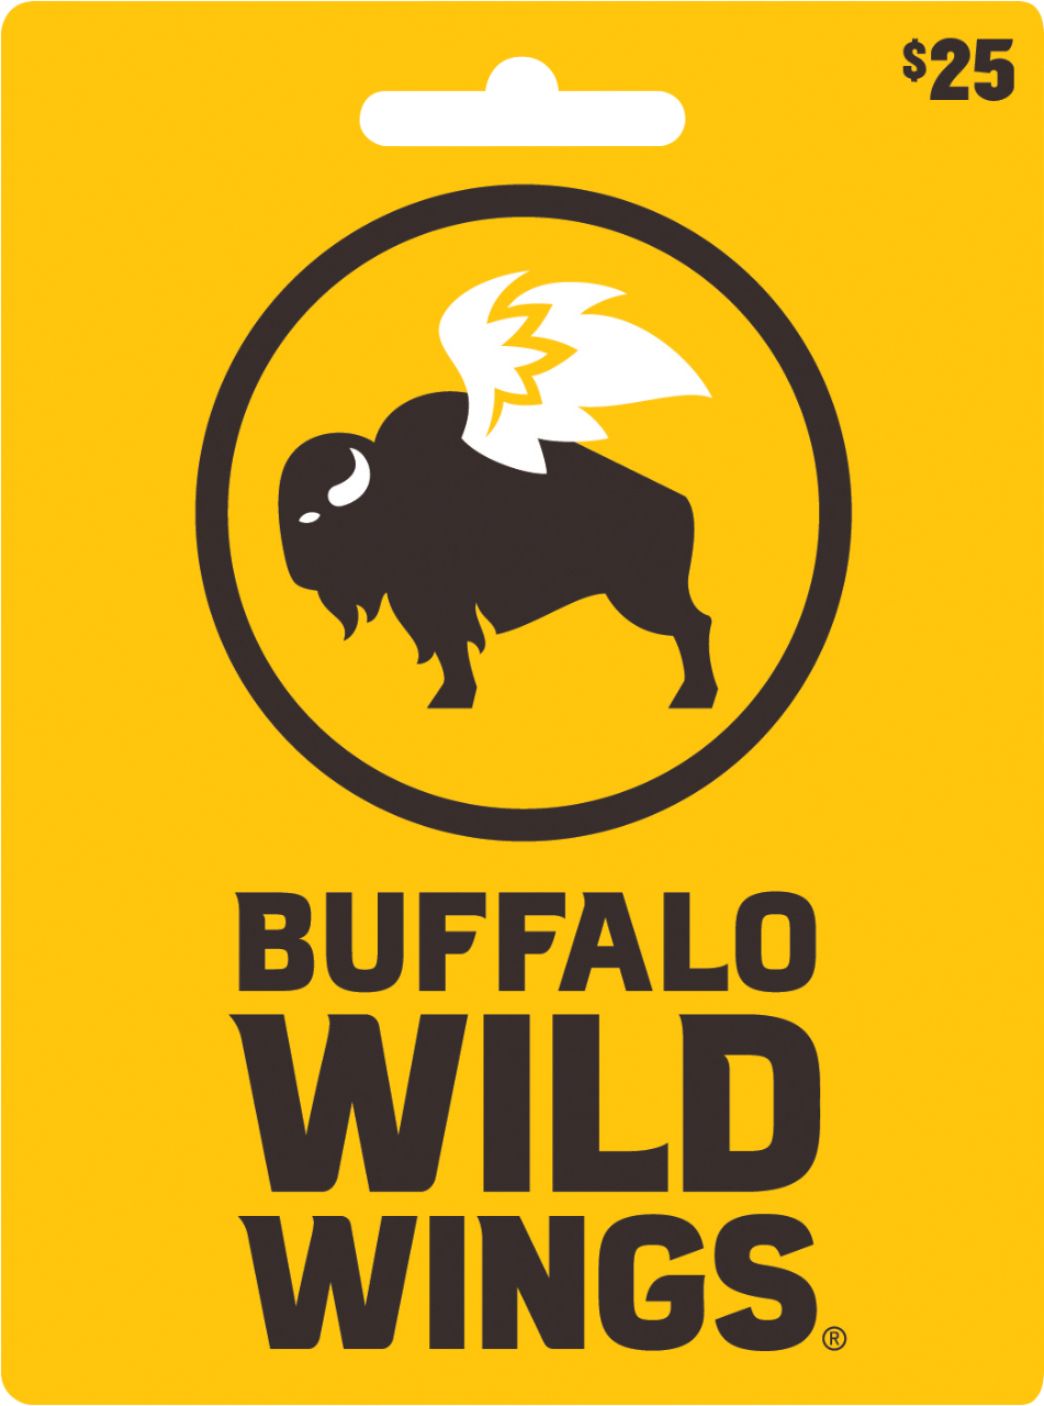 ventura99: Buffalo Wild Wings Logo Images